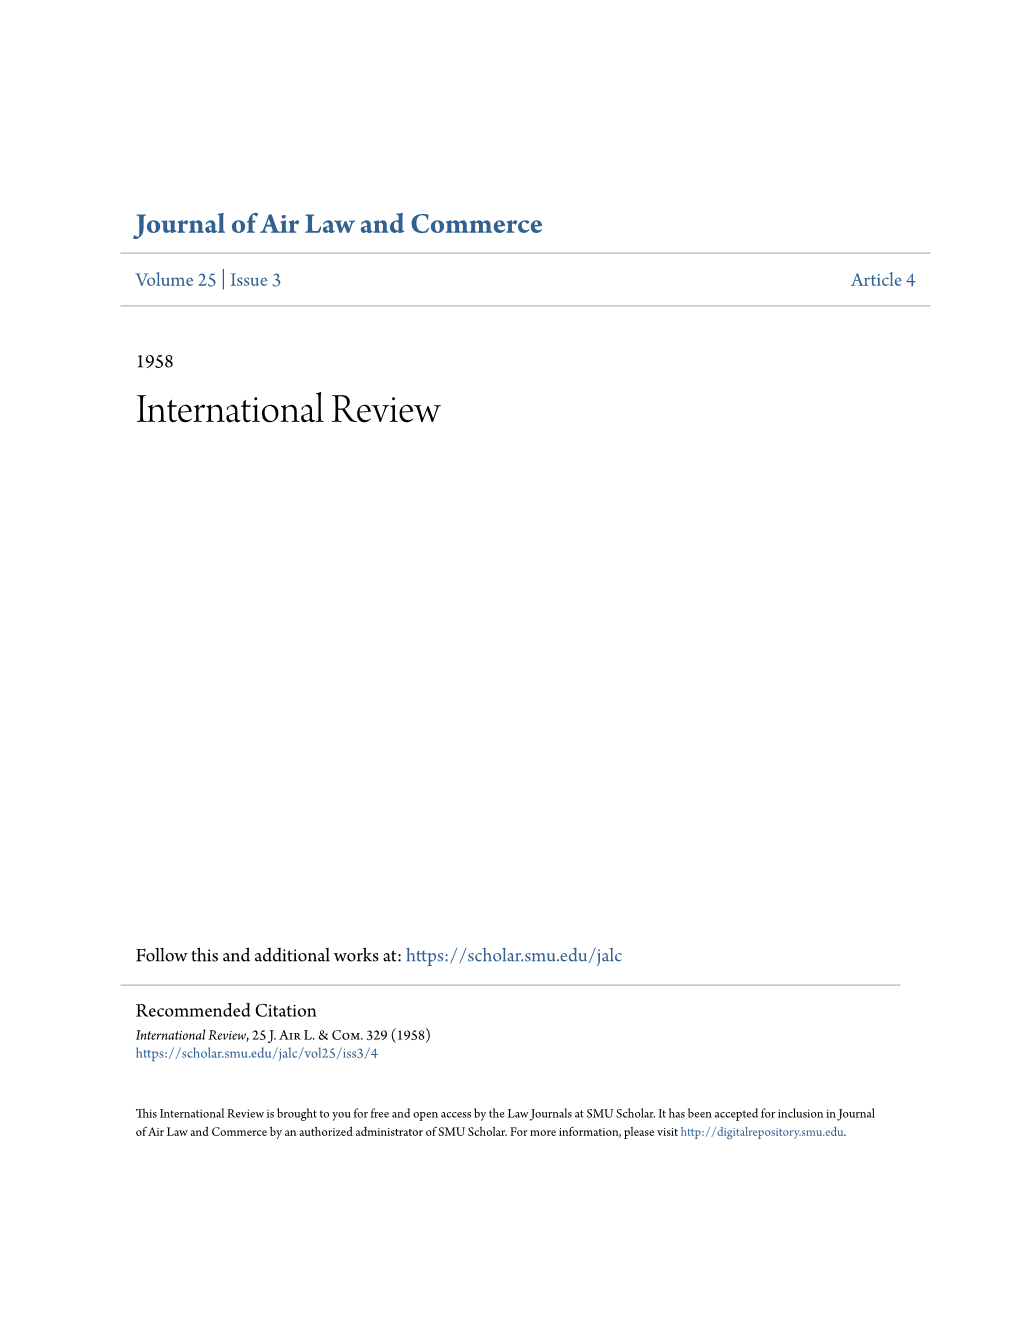 International Review